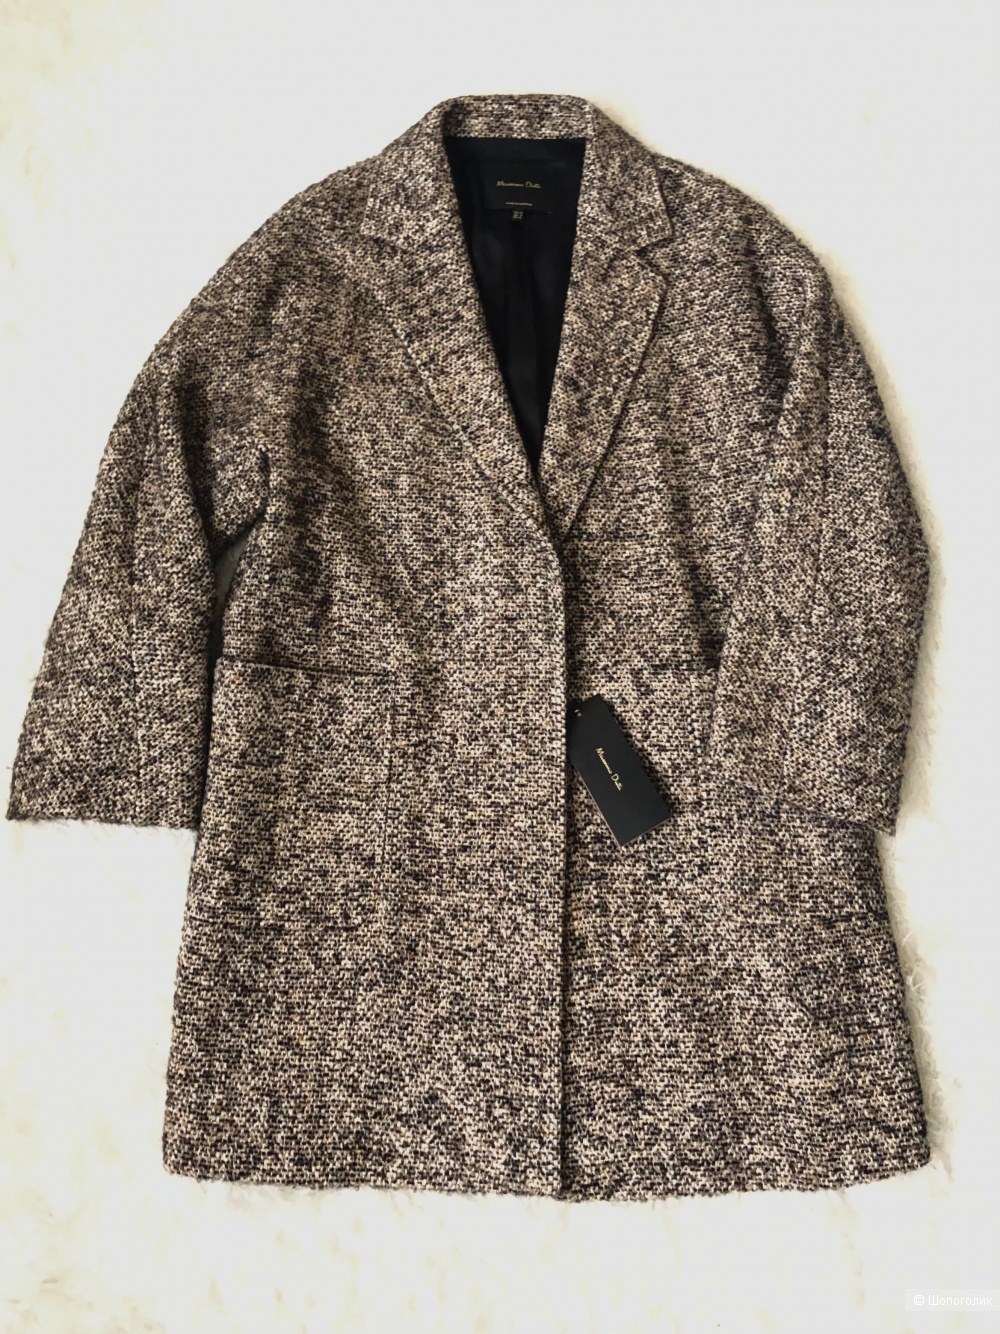 Пальто Massimo Dutti (40)46 размер.